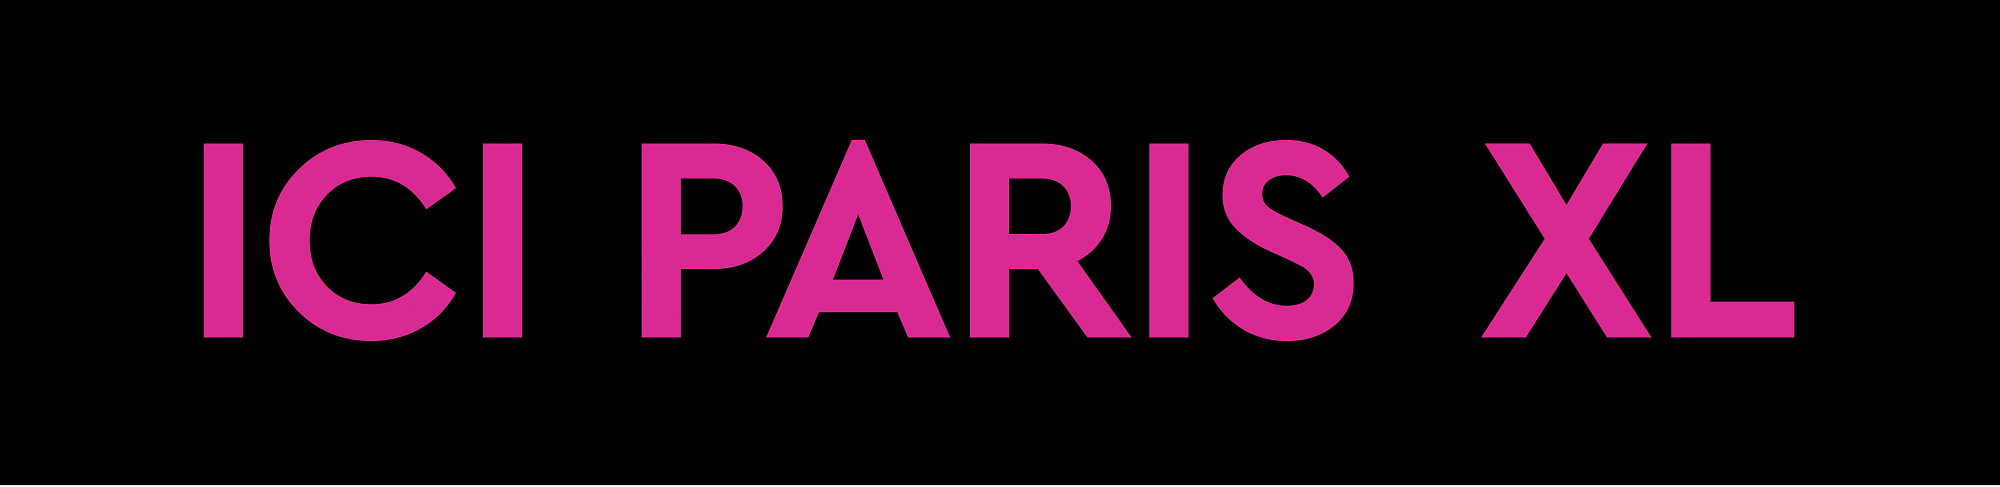 ICI PARIS XL folder